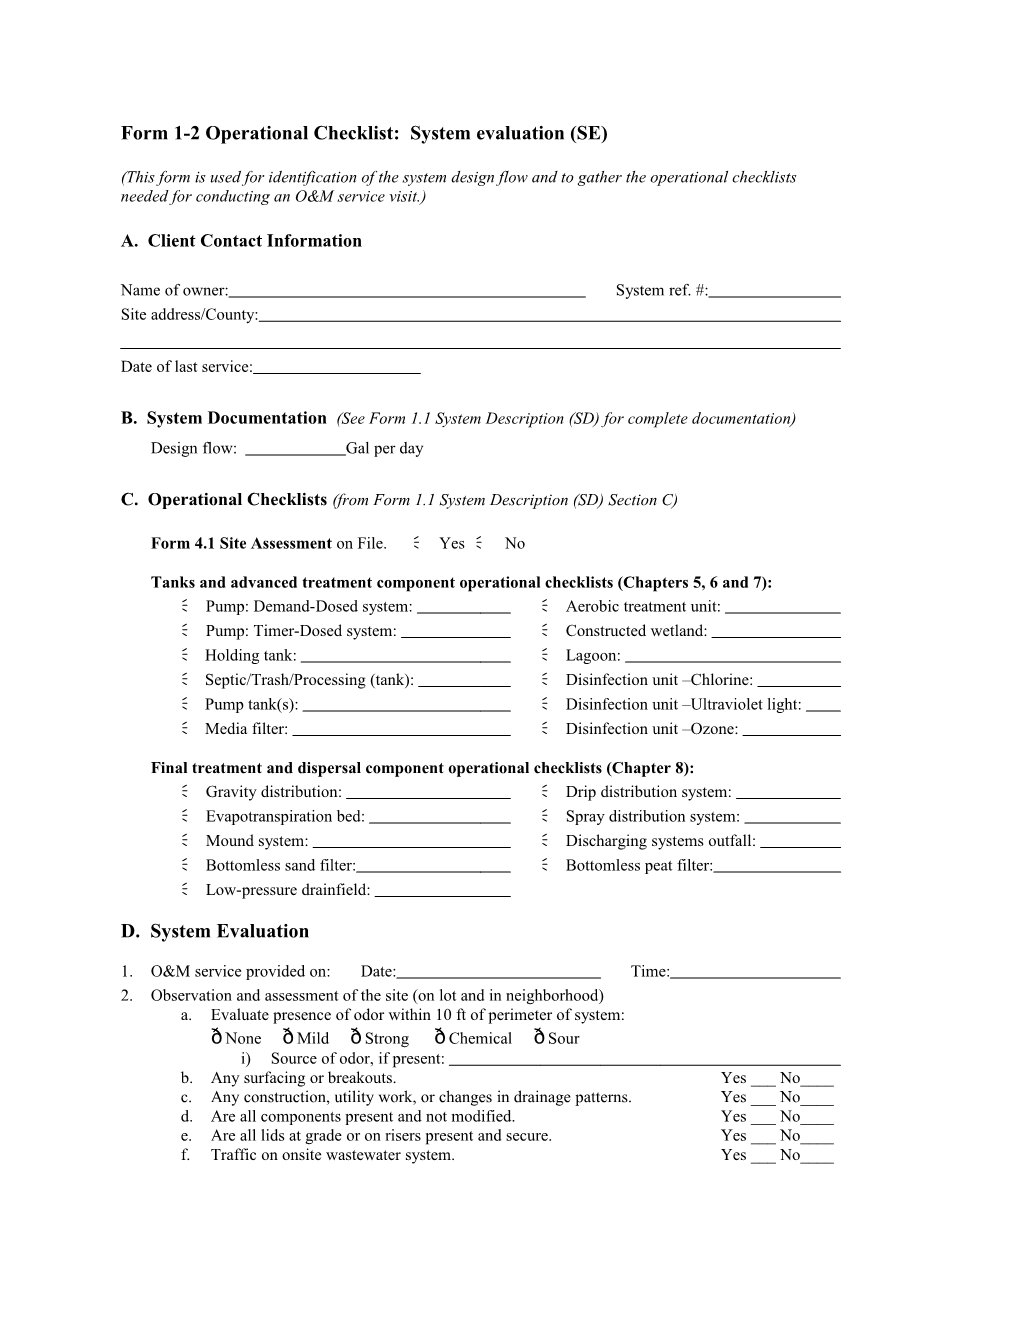 Form 1-2 Operational Checklist: System Evaluation (SE)